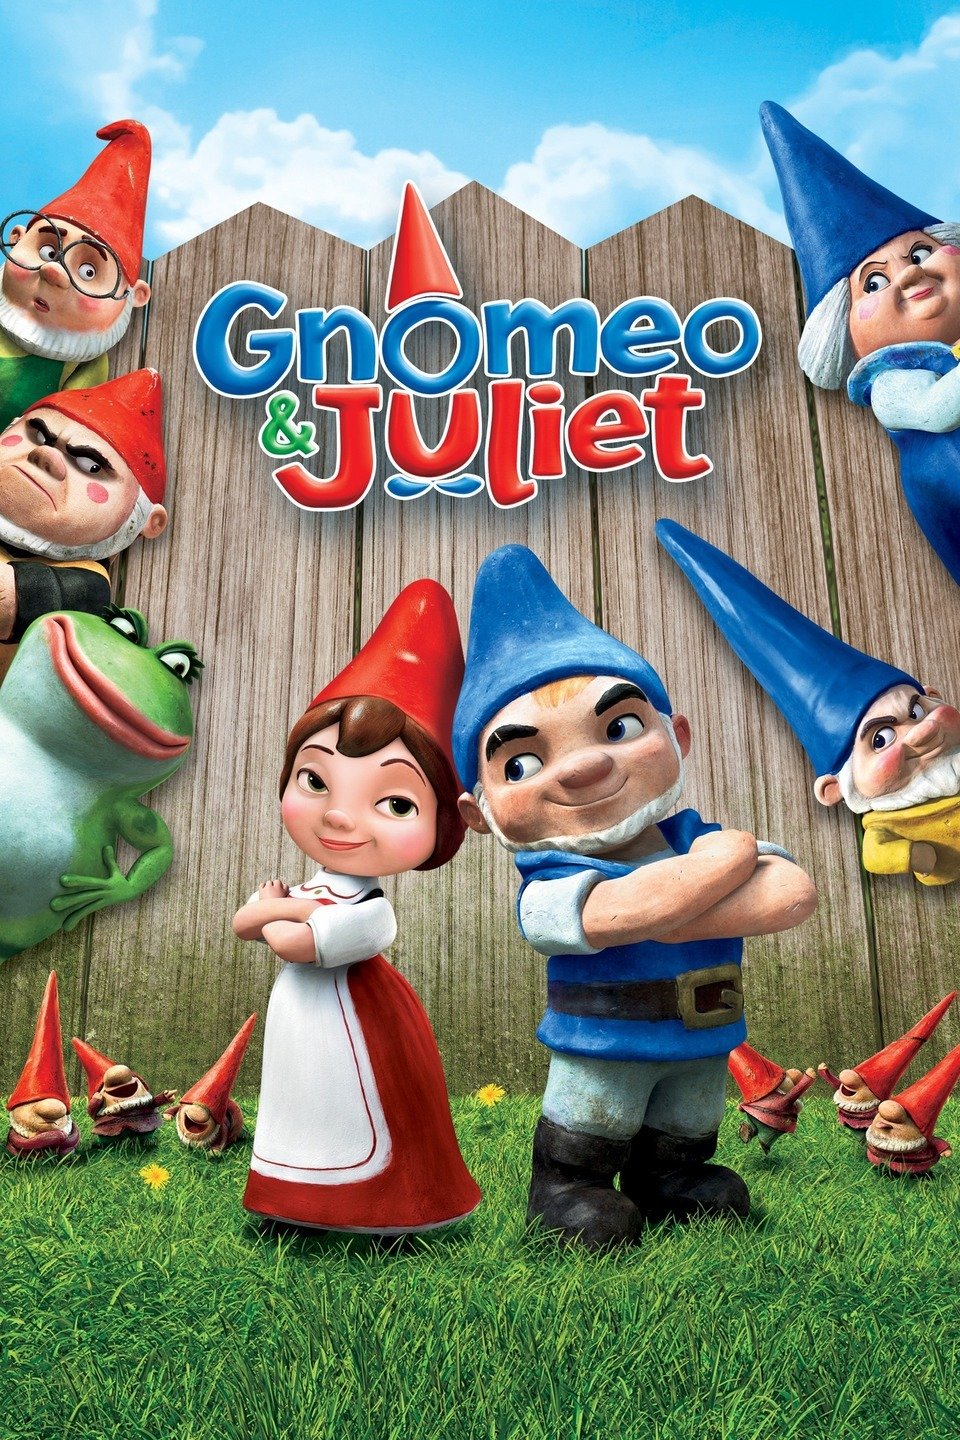 gnomeo and juliet tybalt